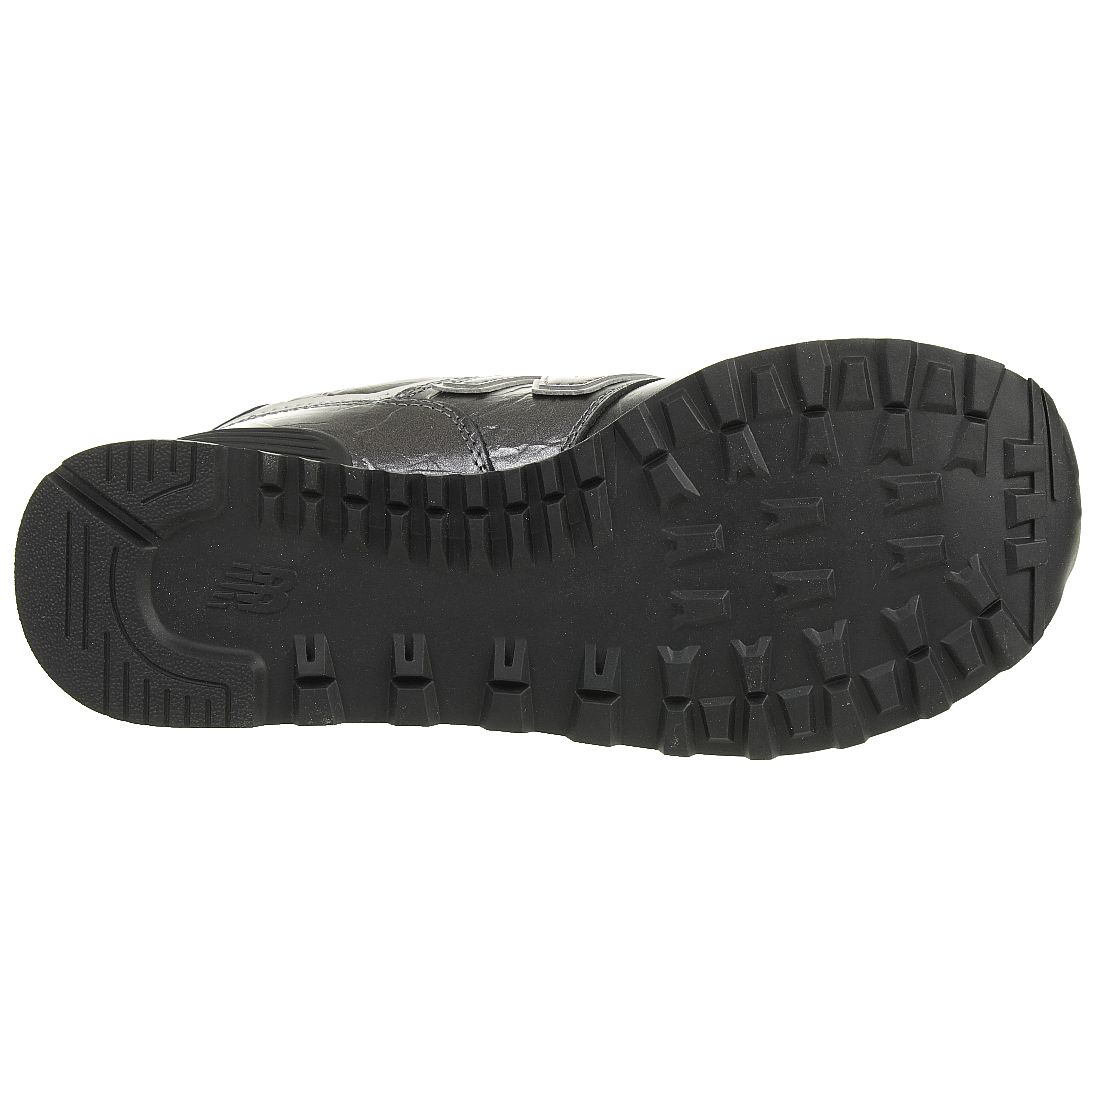 New Balance WL574 WNF Classic Sneaker Damen Schuhe metallic schwarz